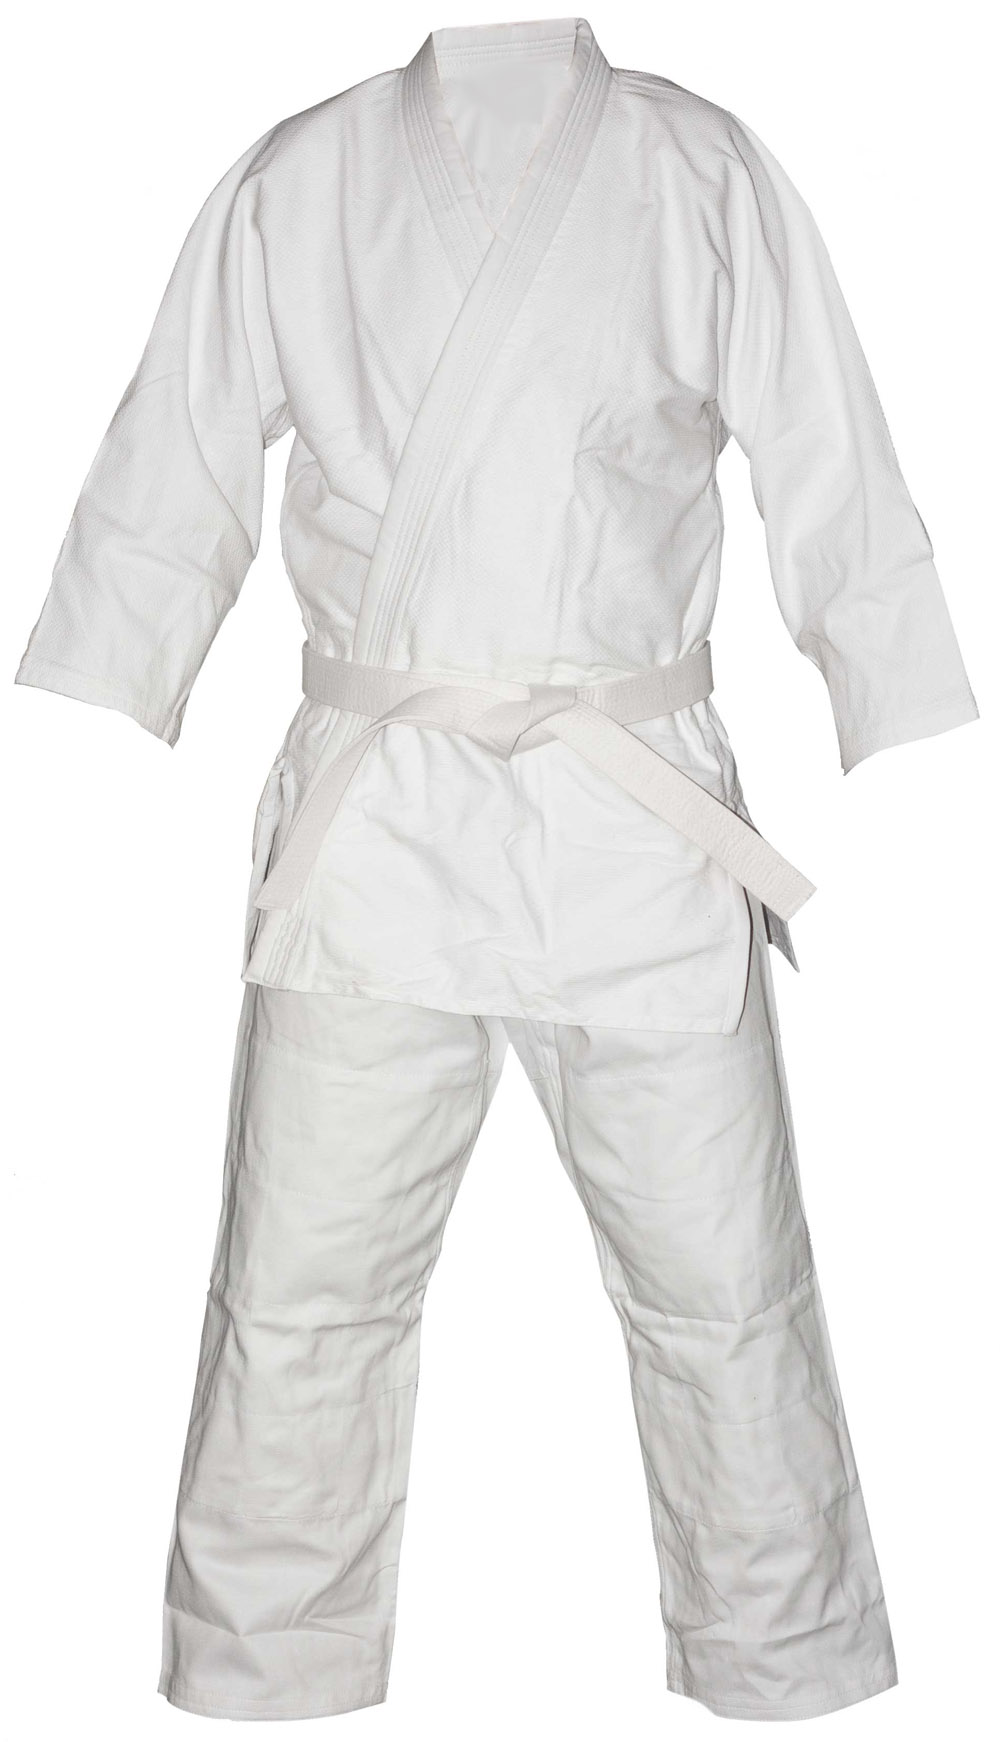 Karate Suit Gi Uniform White Adult & Kids Free white belt